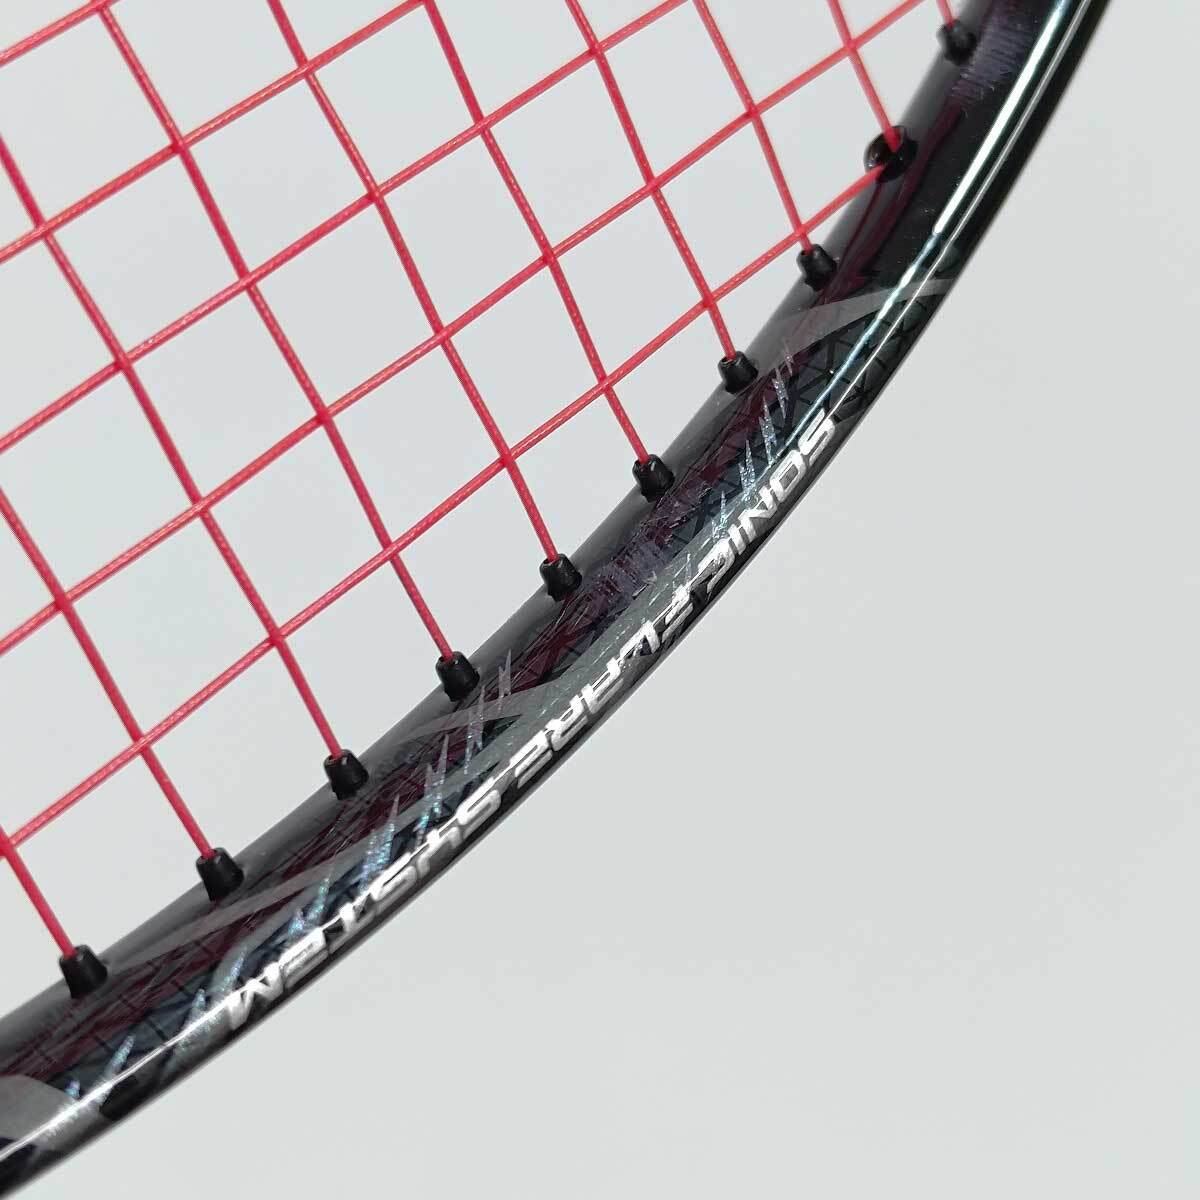 [ used ] Yonex nano flair 1000Z badminton racket NANOFLARE 1000Z 3UG5 YONEX